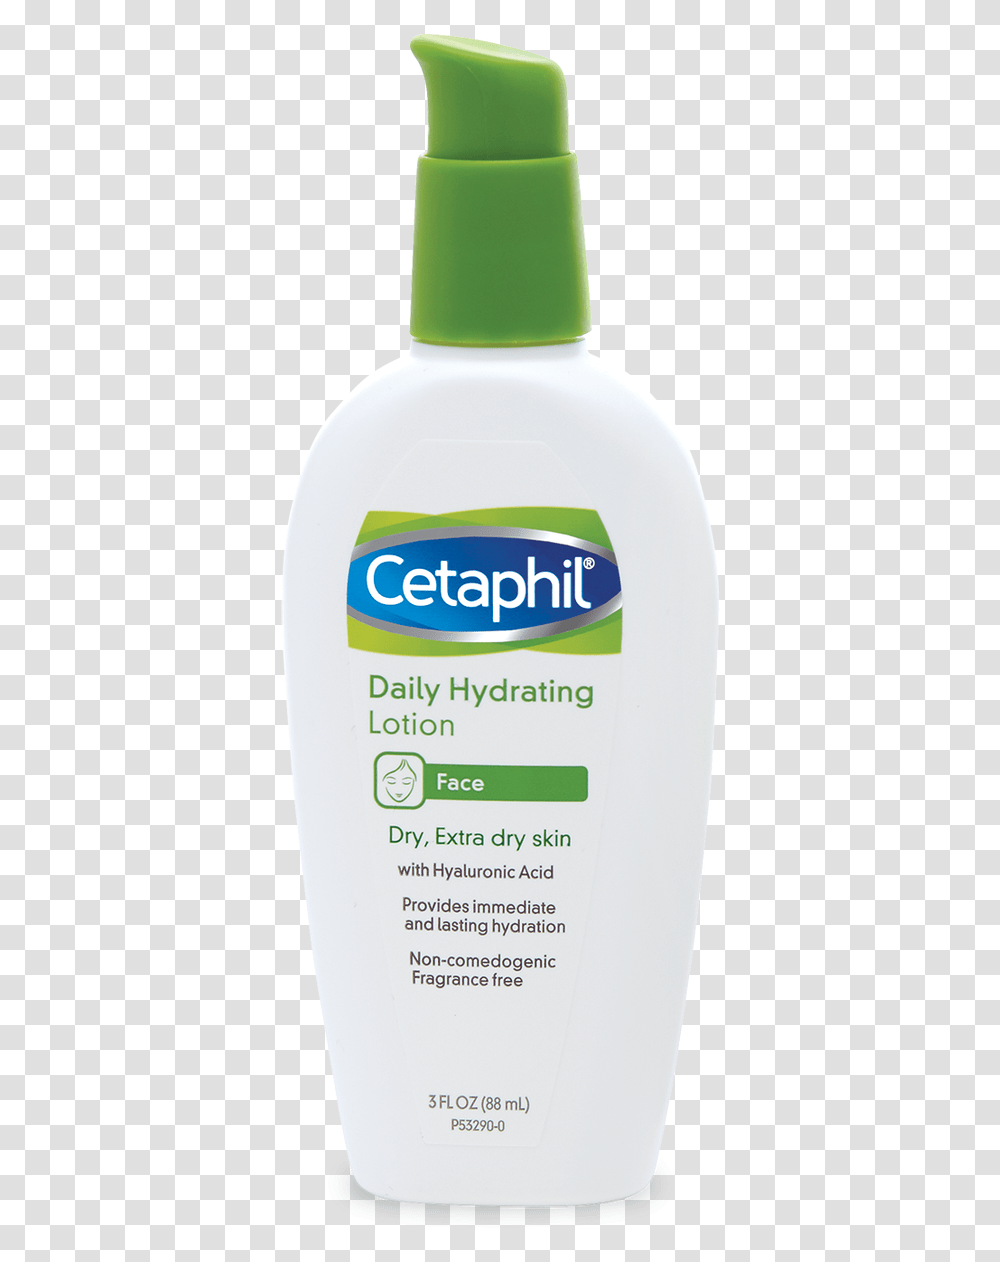 Cetaphil Moisturizer For Dry Skin, Bottle, Lotion, Cosmetics, Plant Transparent Png